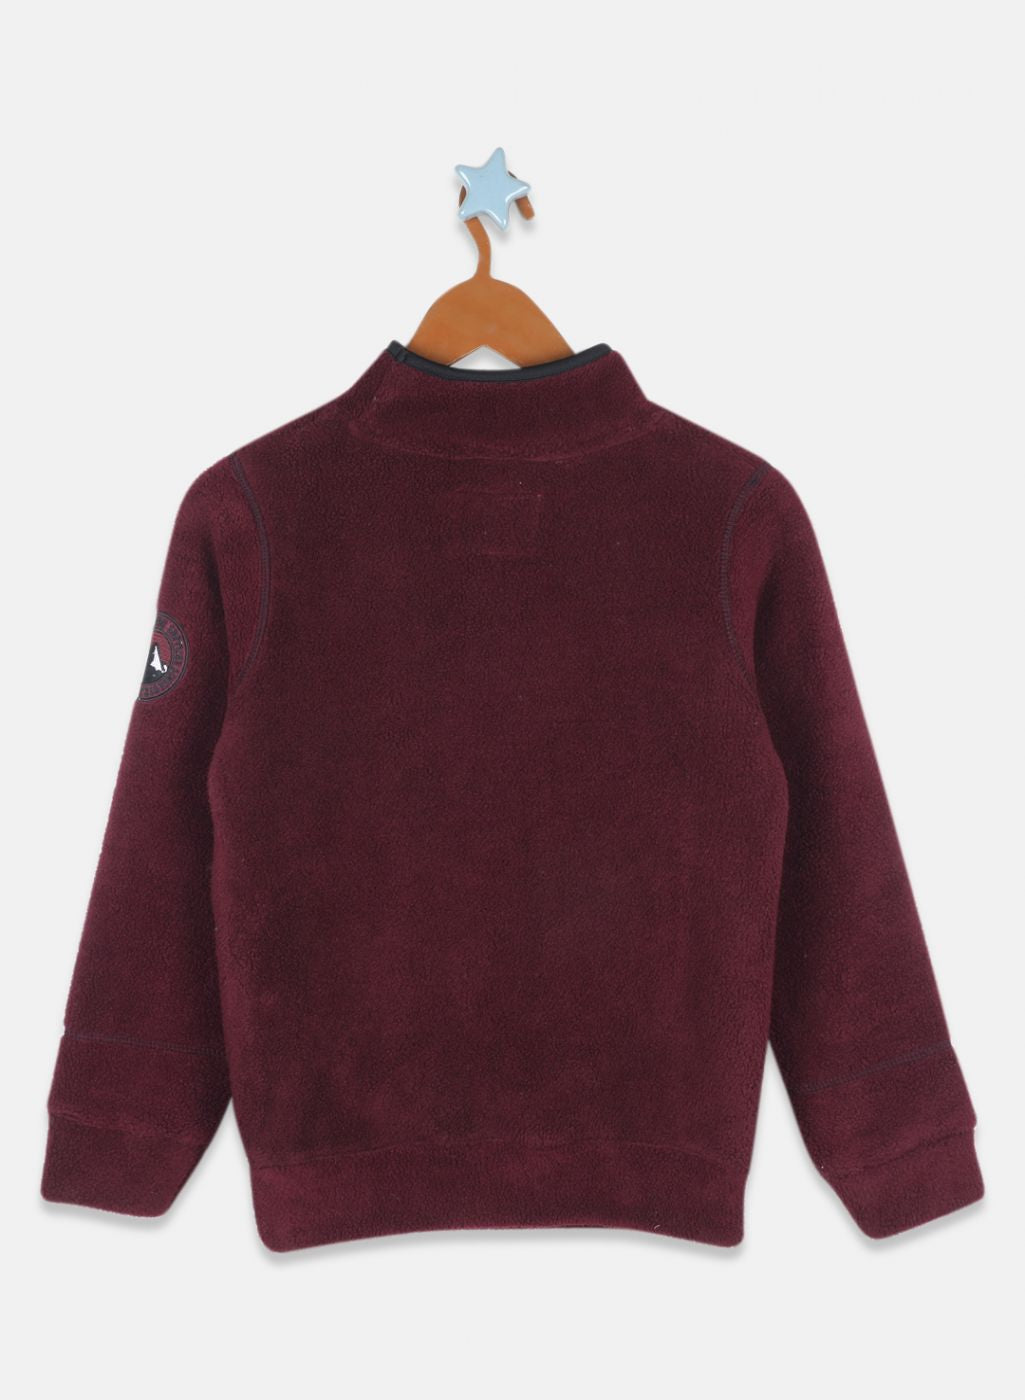 Boys Maroon Printed Sweatshirt